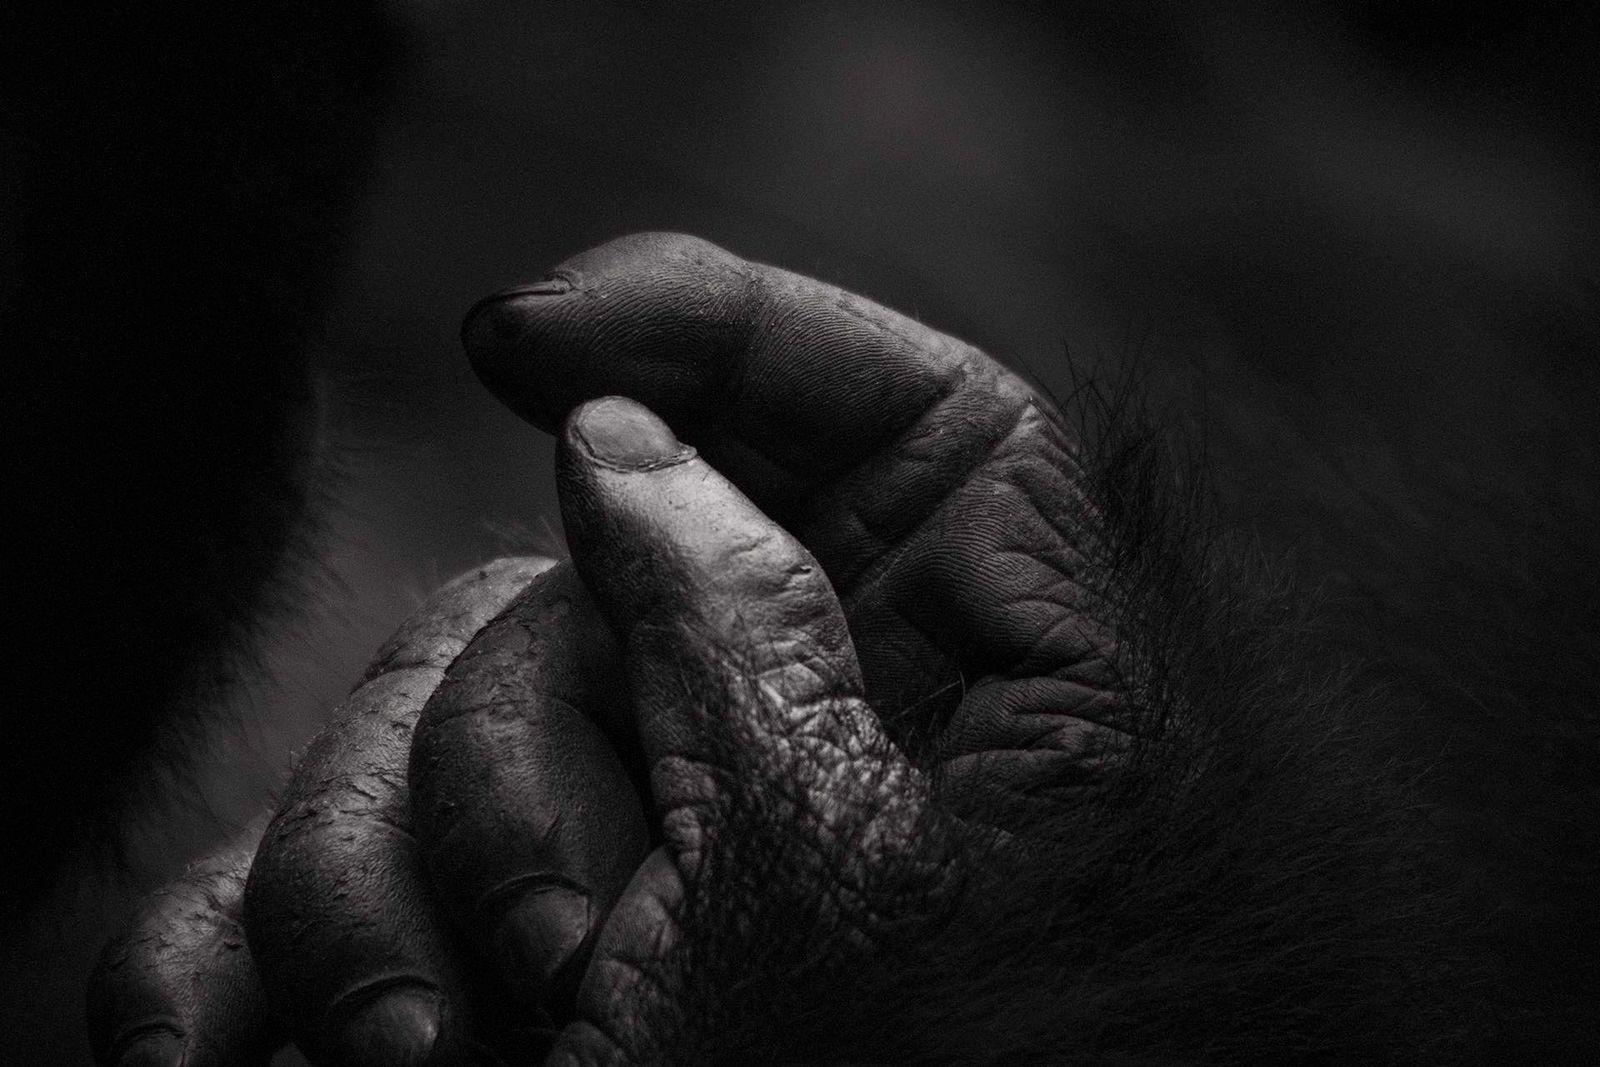 98% Human - Mountain Gorilla Hand